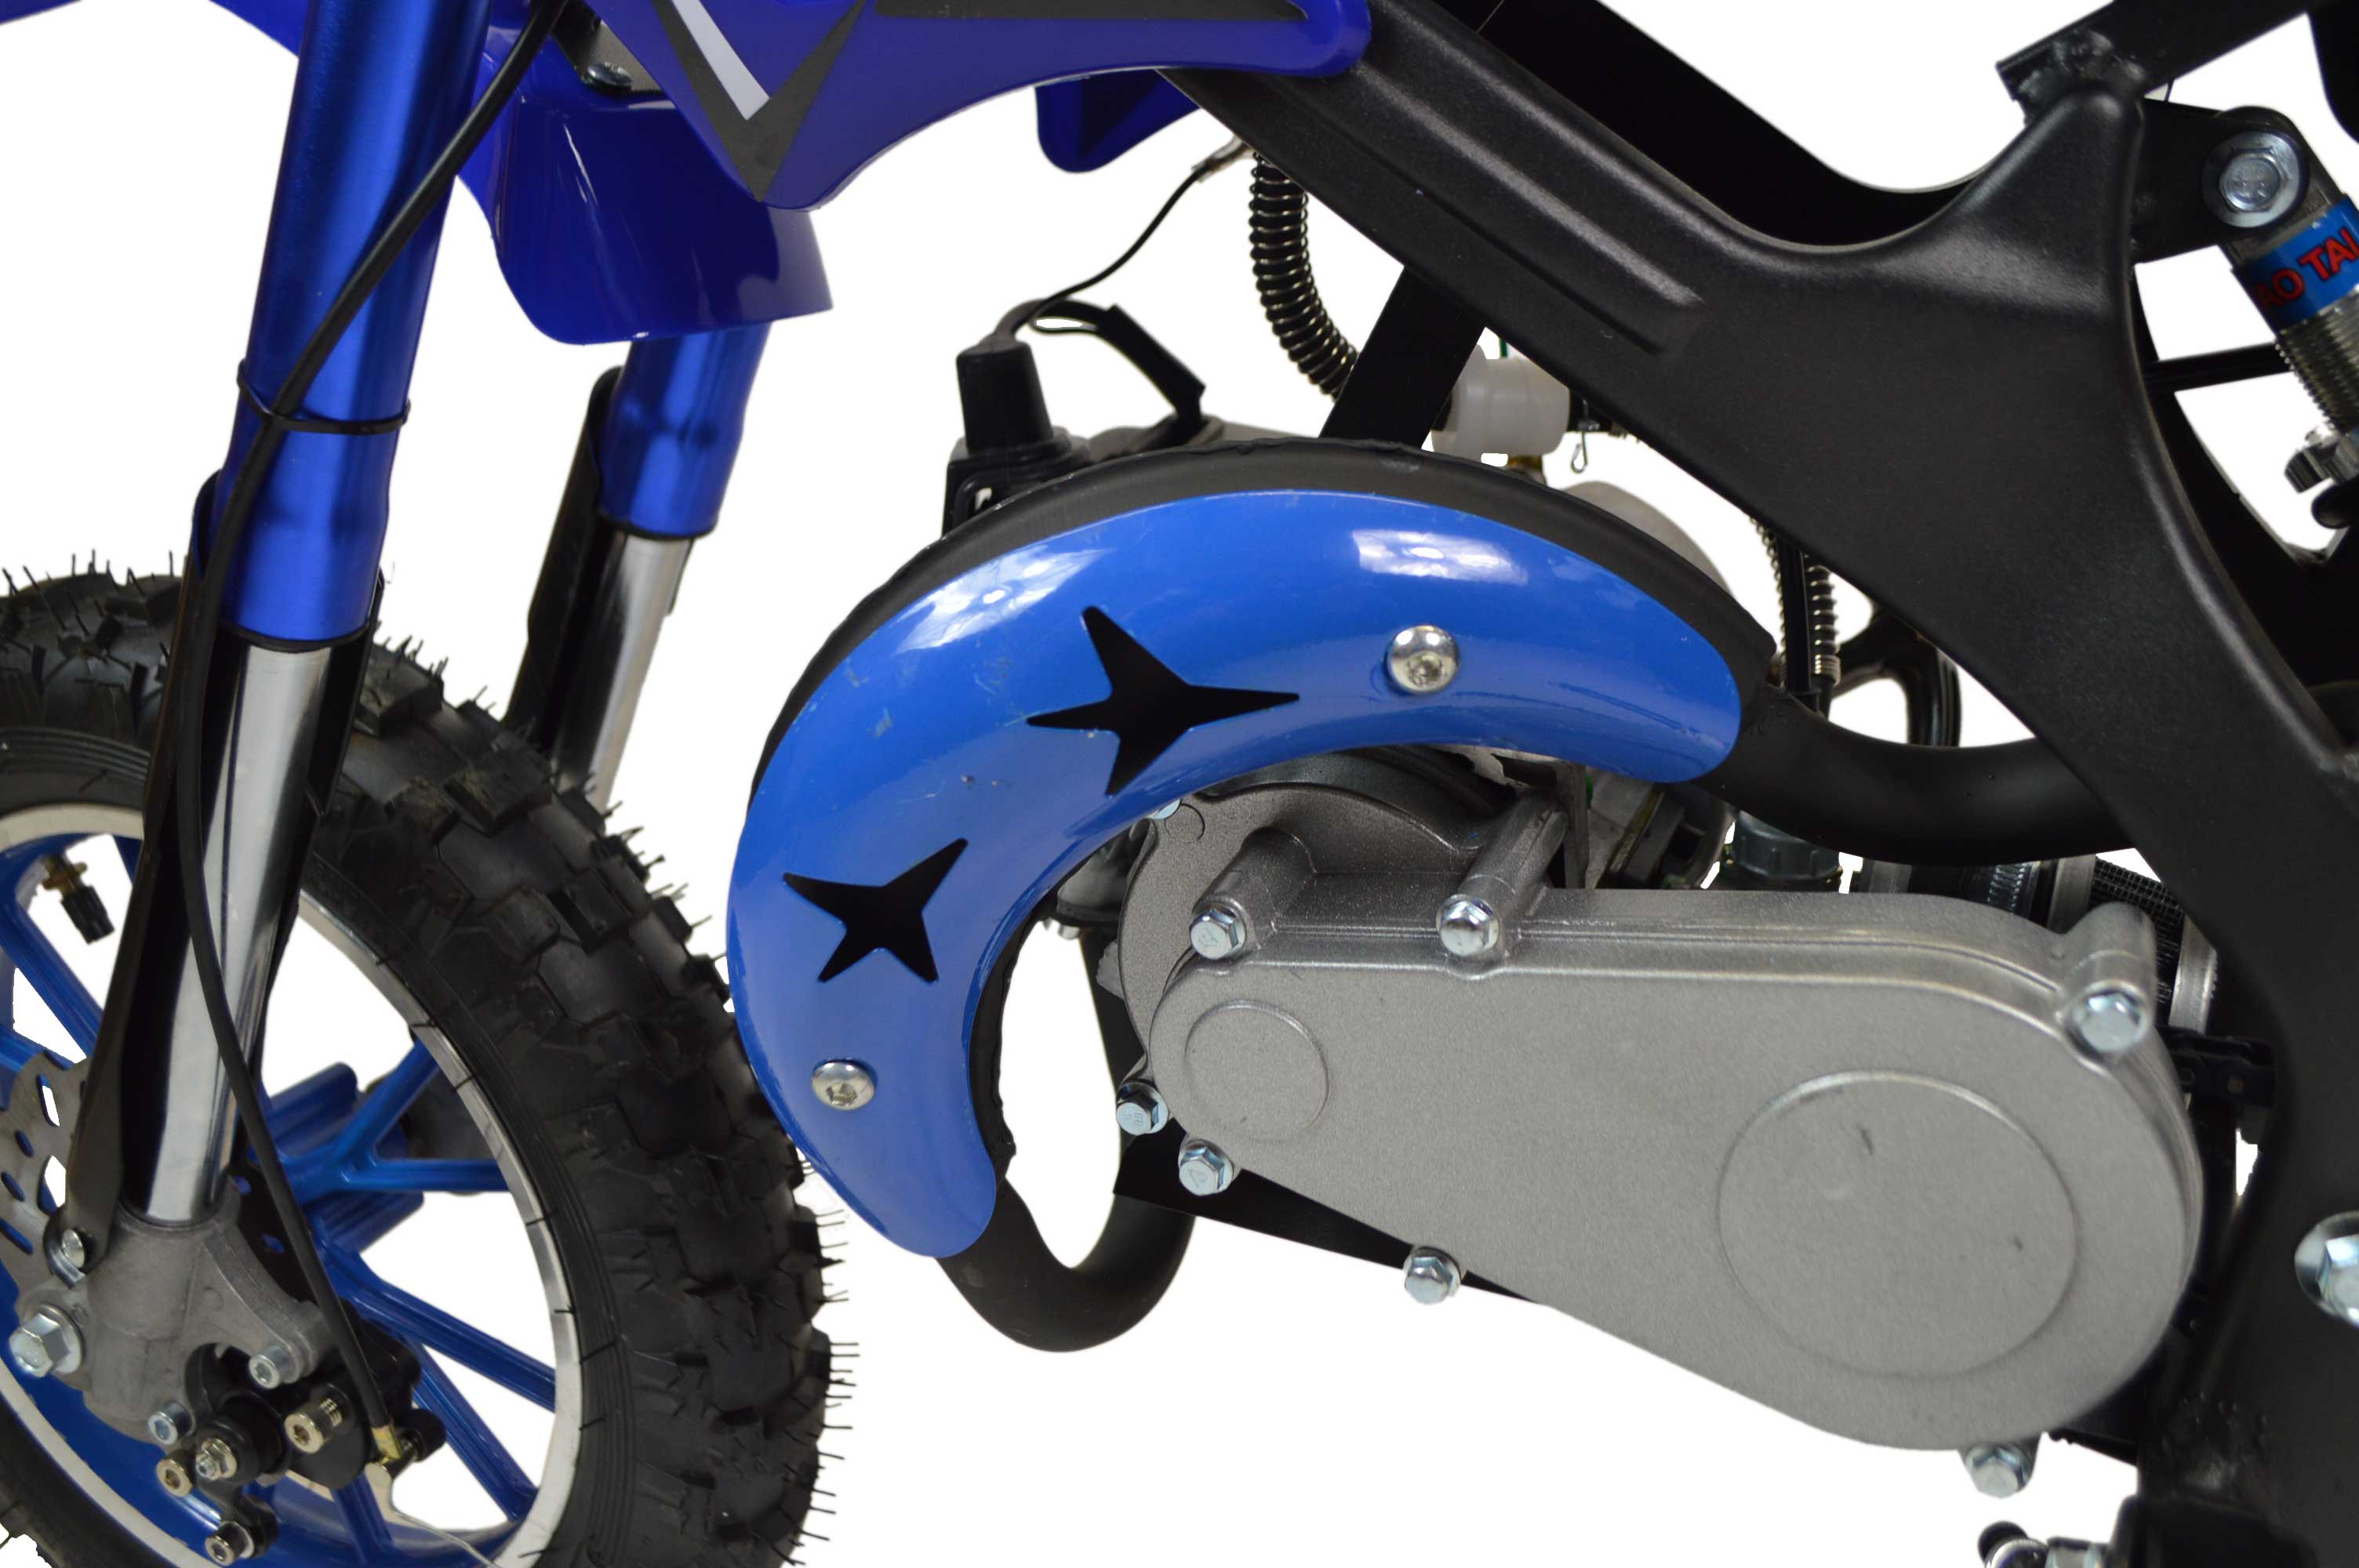 Zipper Mini Moto A Gasolina 50cc - Azul